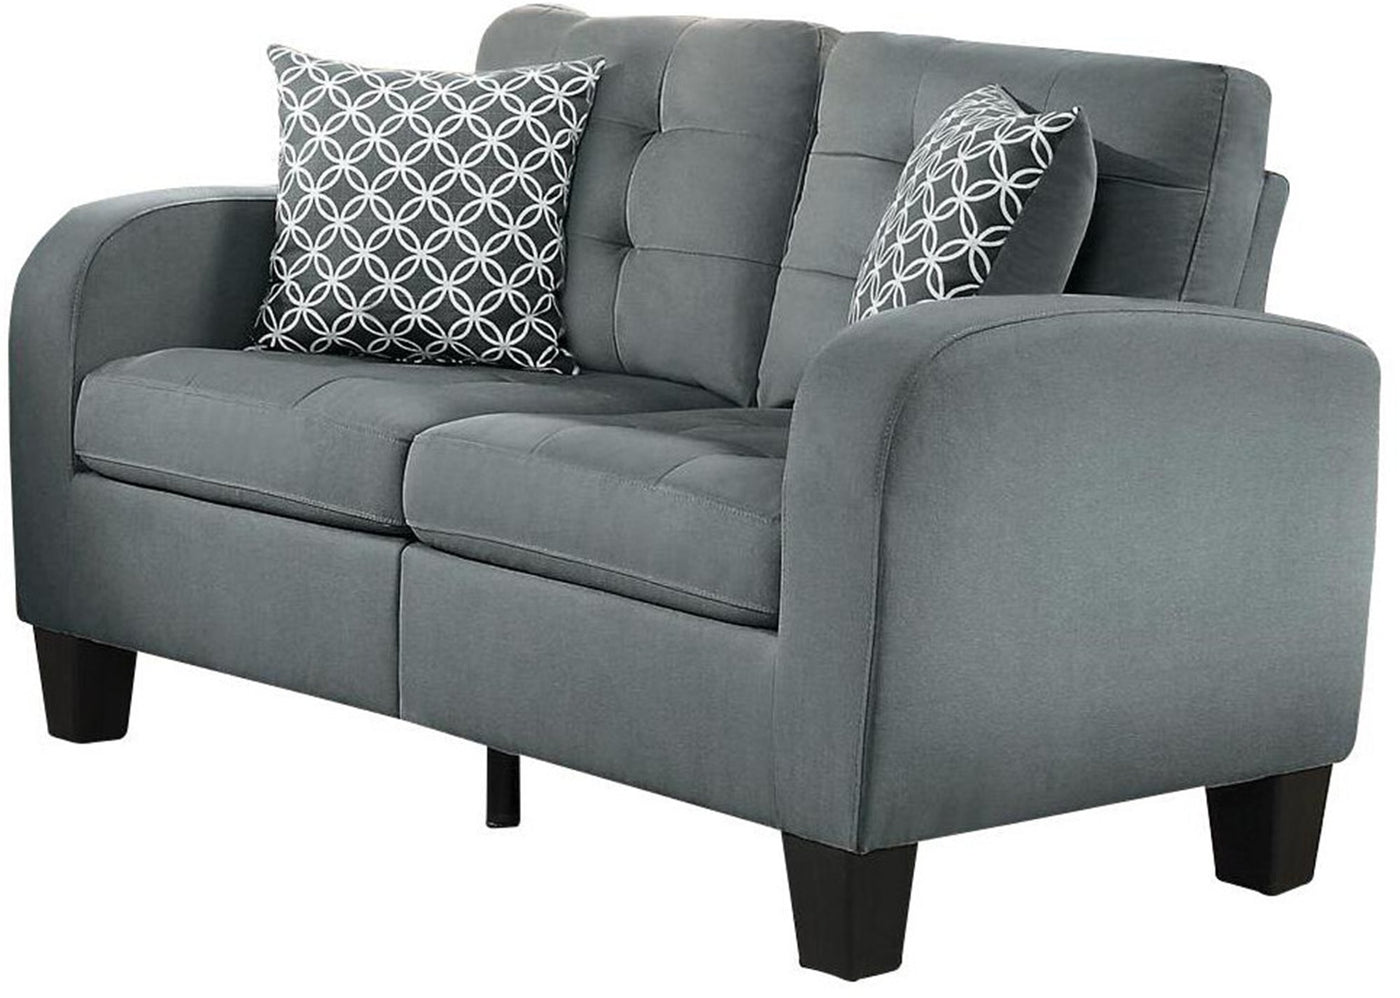 Homelegance Sinclair Park 2pc Sofa Love Seat In Grey Fabric